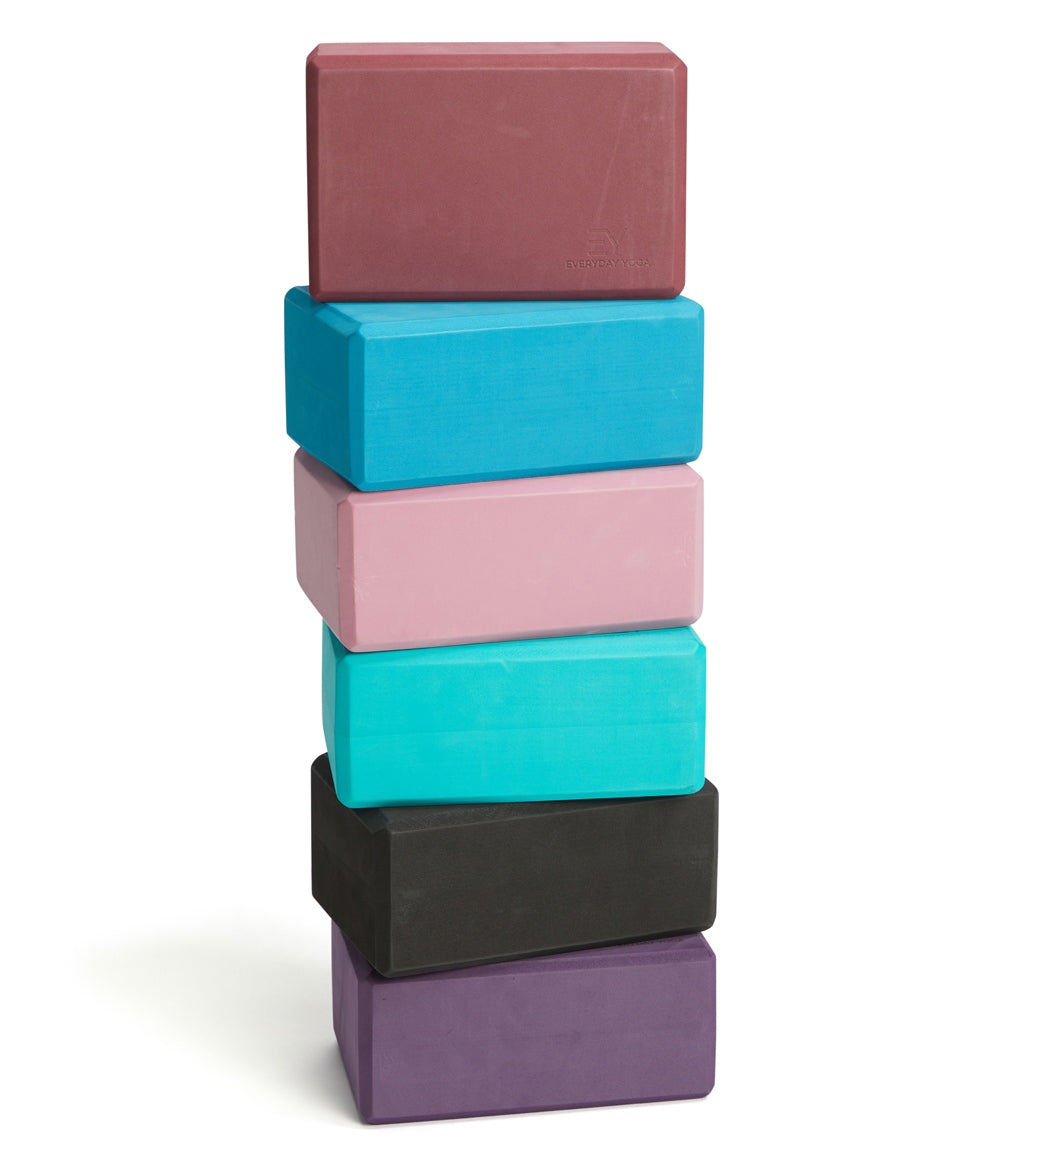 URBNFit Yoga Blocks 2 Pack - Sturdy Foam Yoga Block Set with Strap